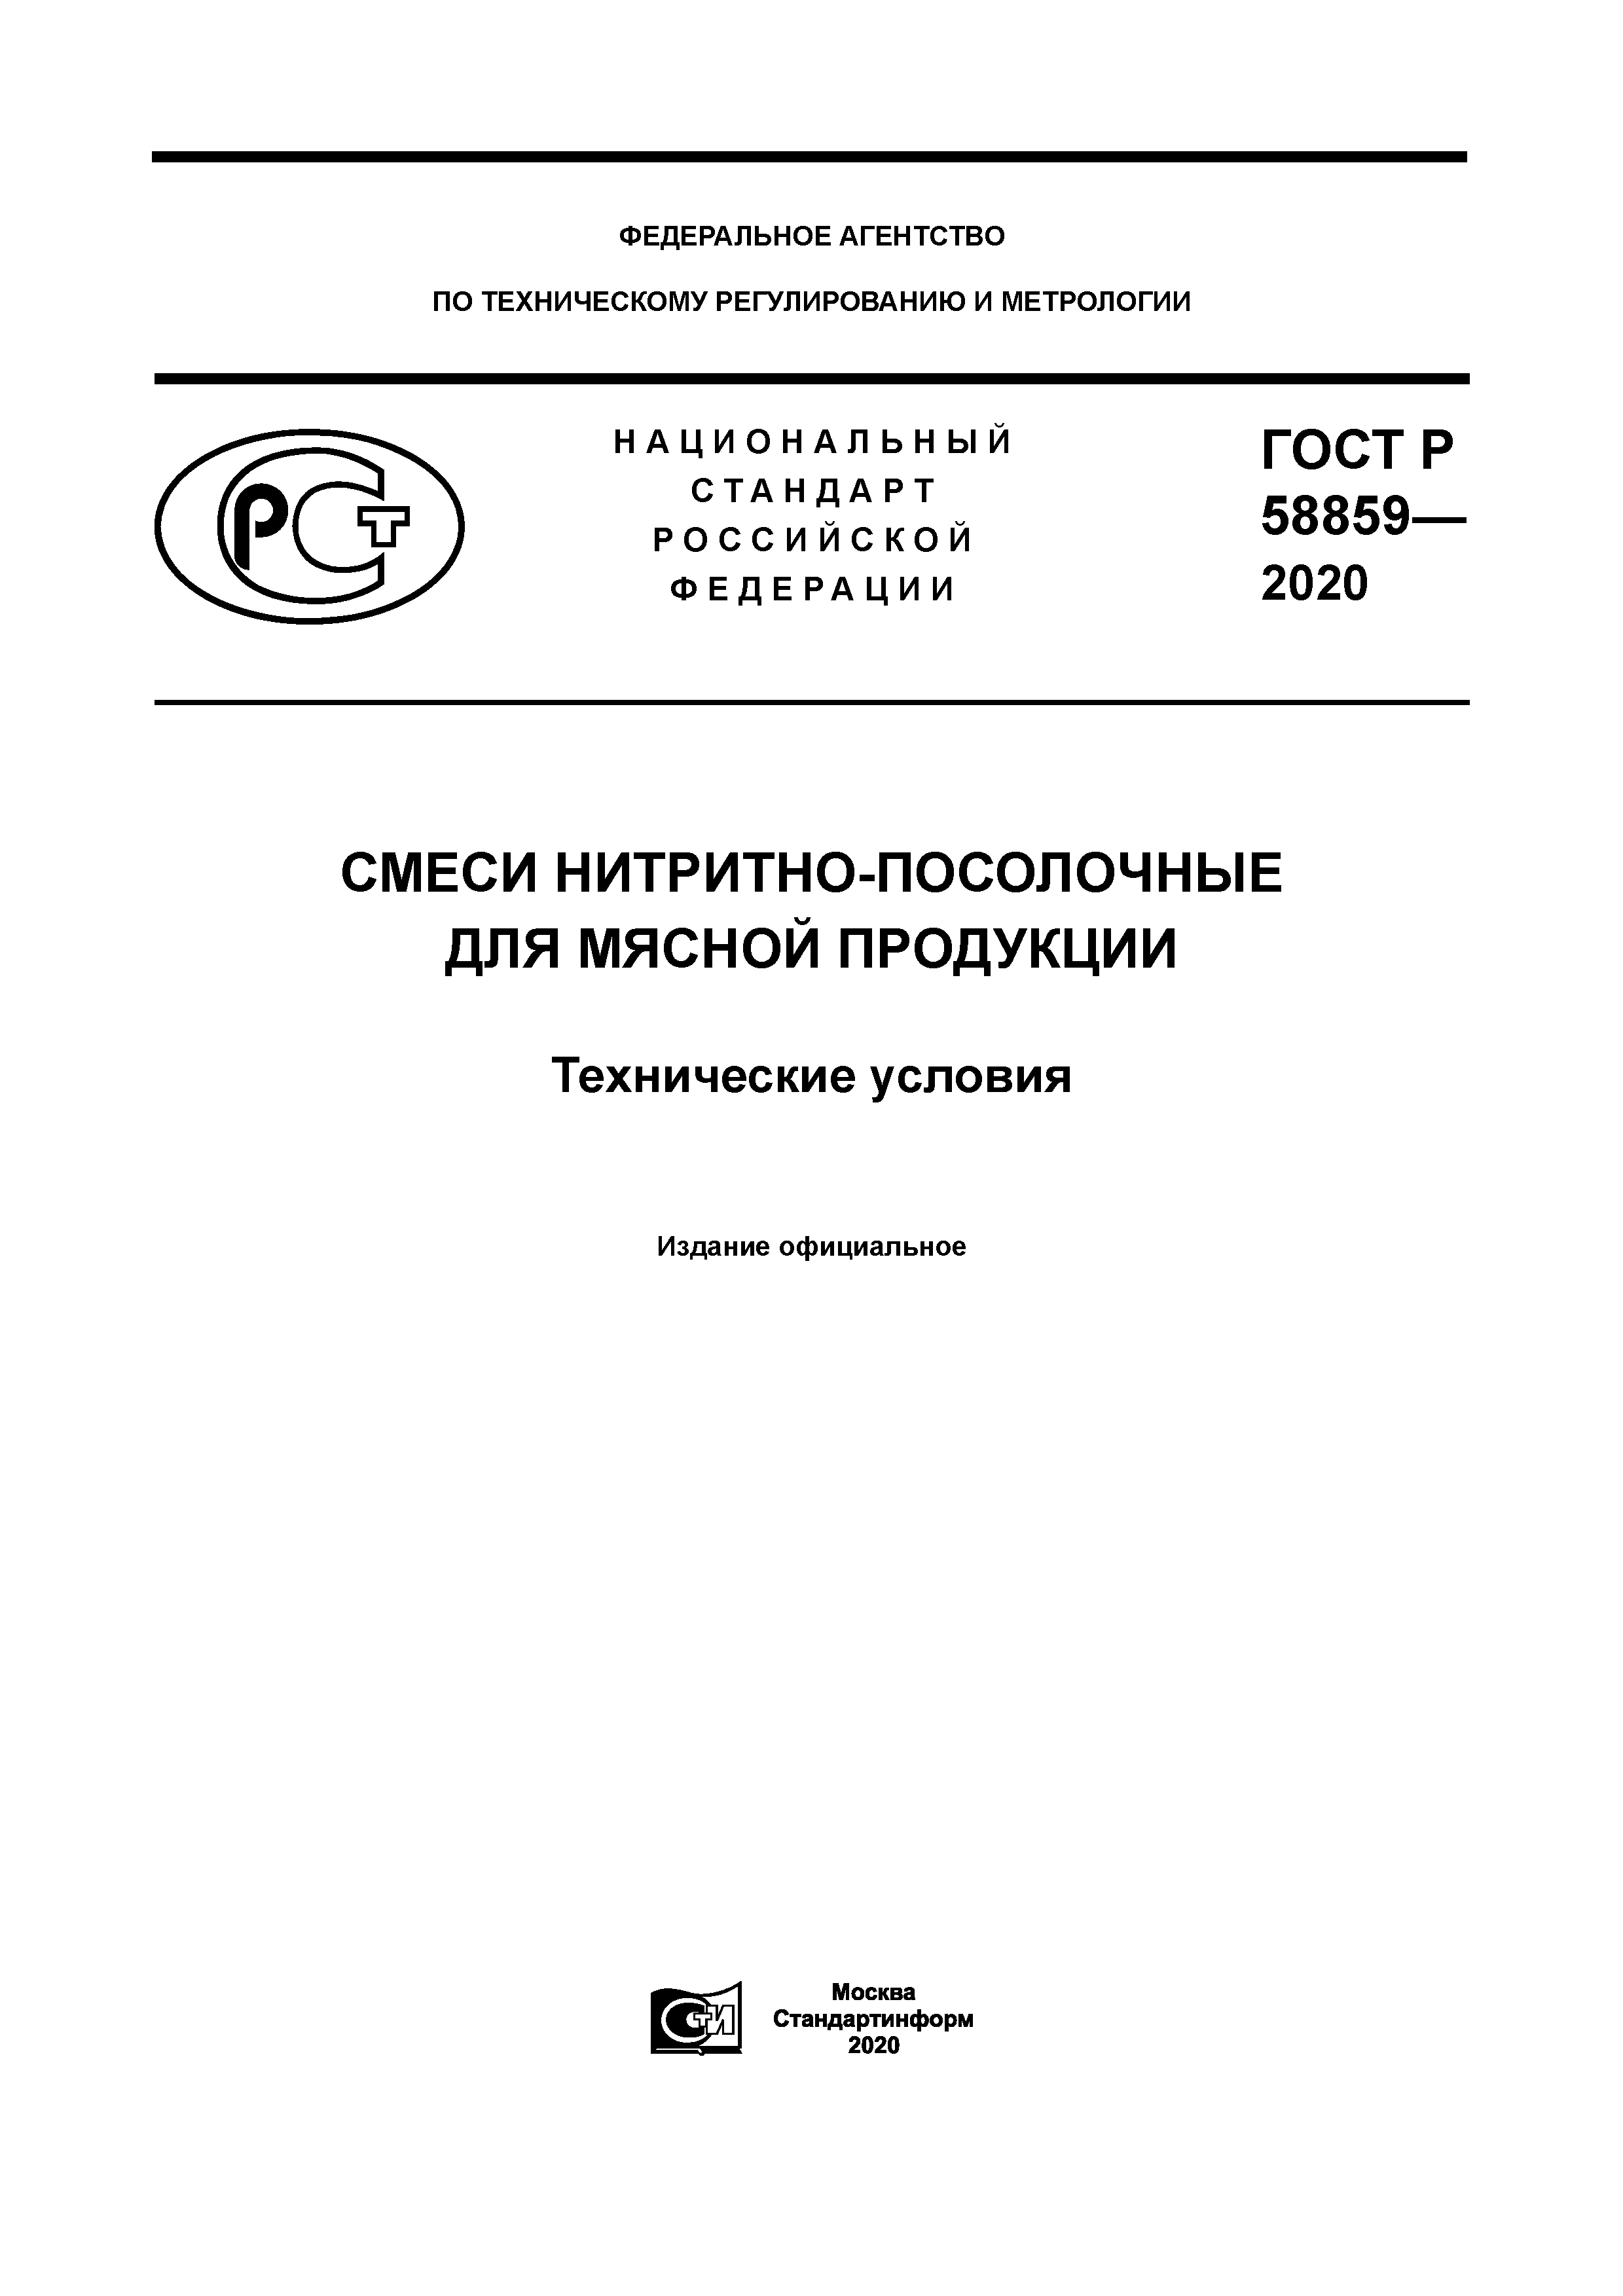 ГОСТ Р 58859-2020